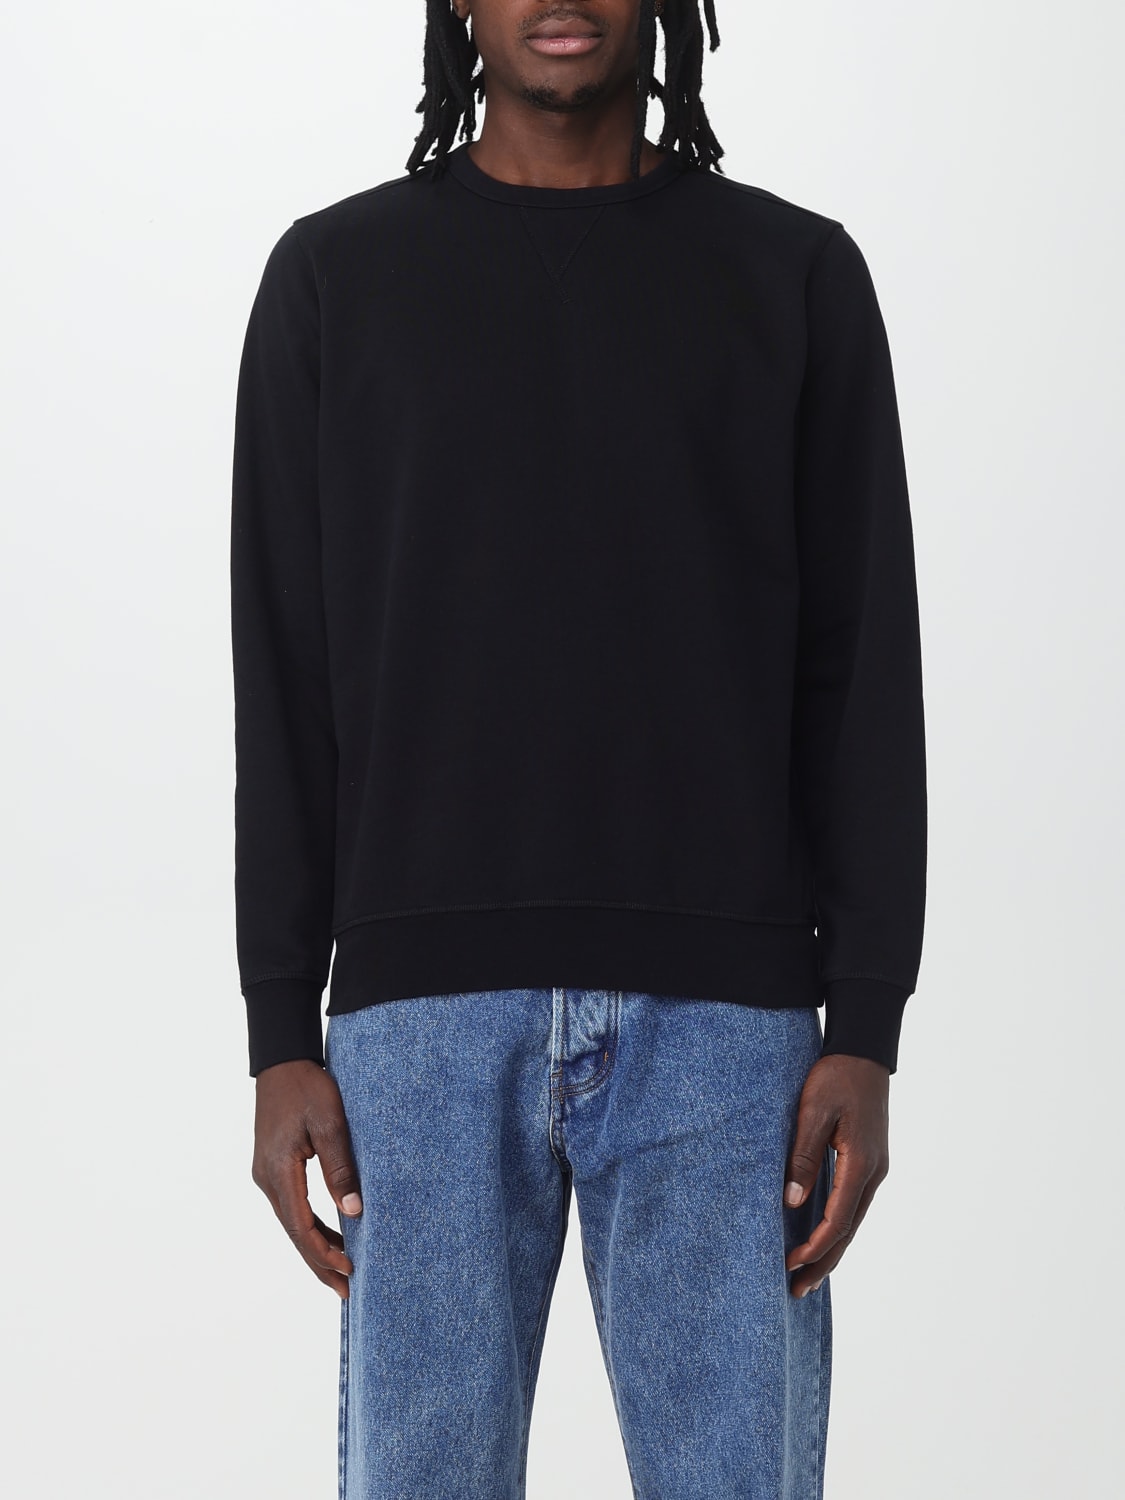 POP TRADING COMPANY: sweater for man - Black | Pop Trading Company